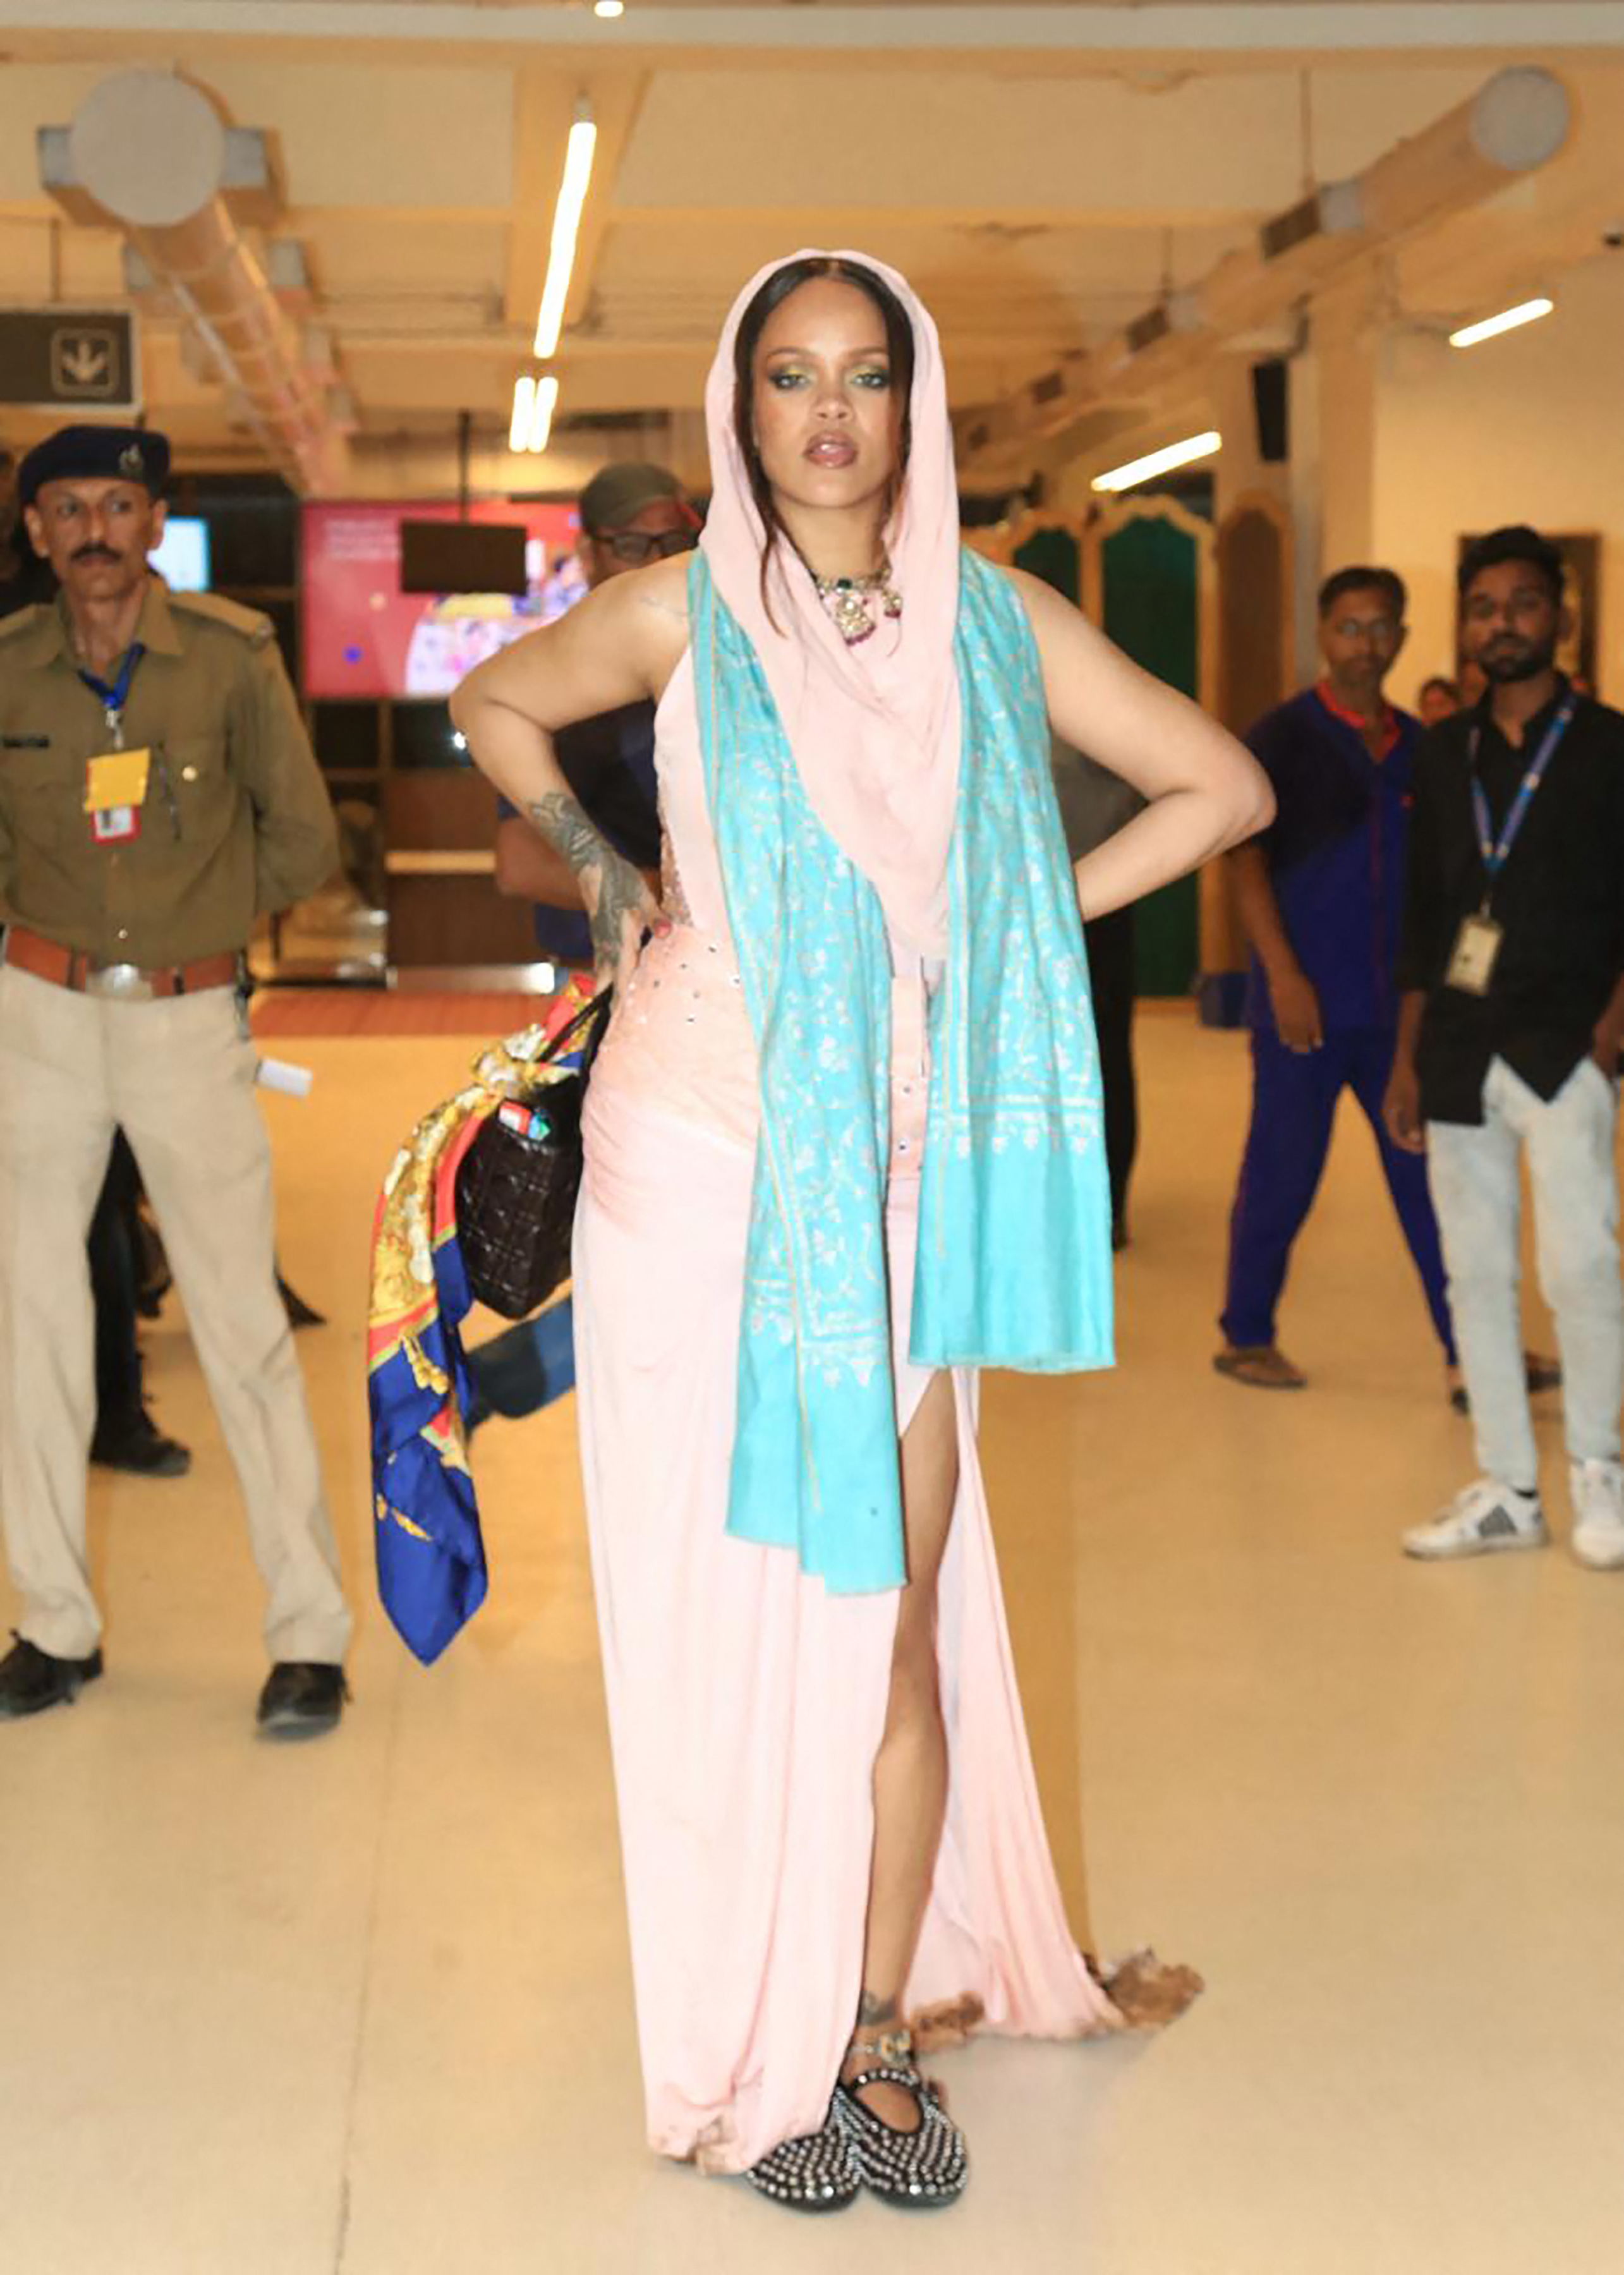 Rihanna performed at Anant Ambani and Radhika Merchant's pre-wedding party in India